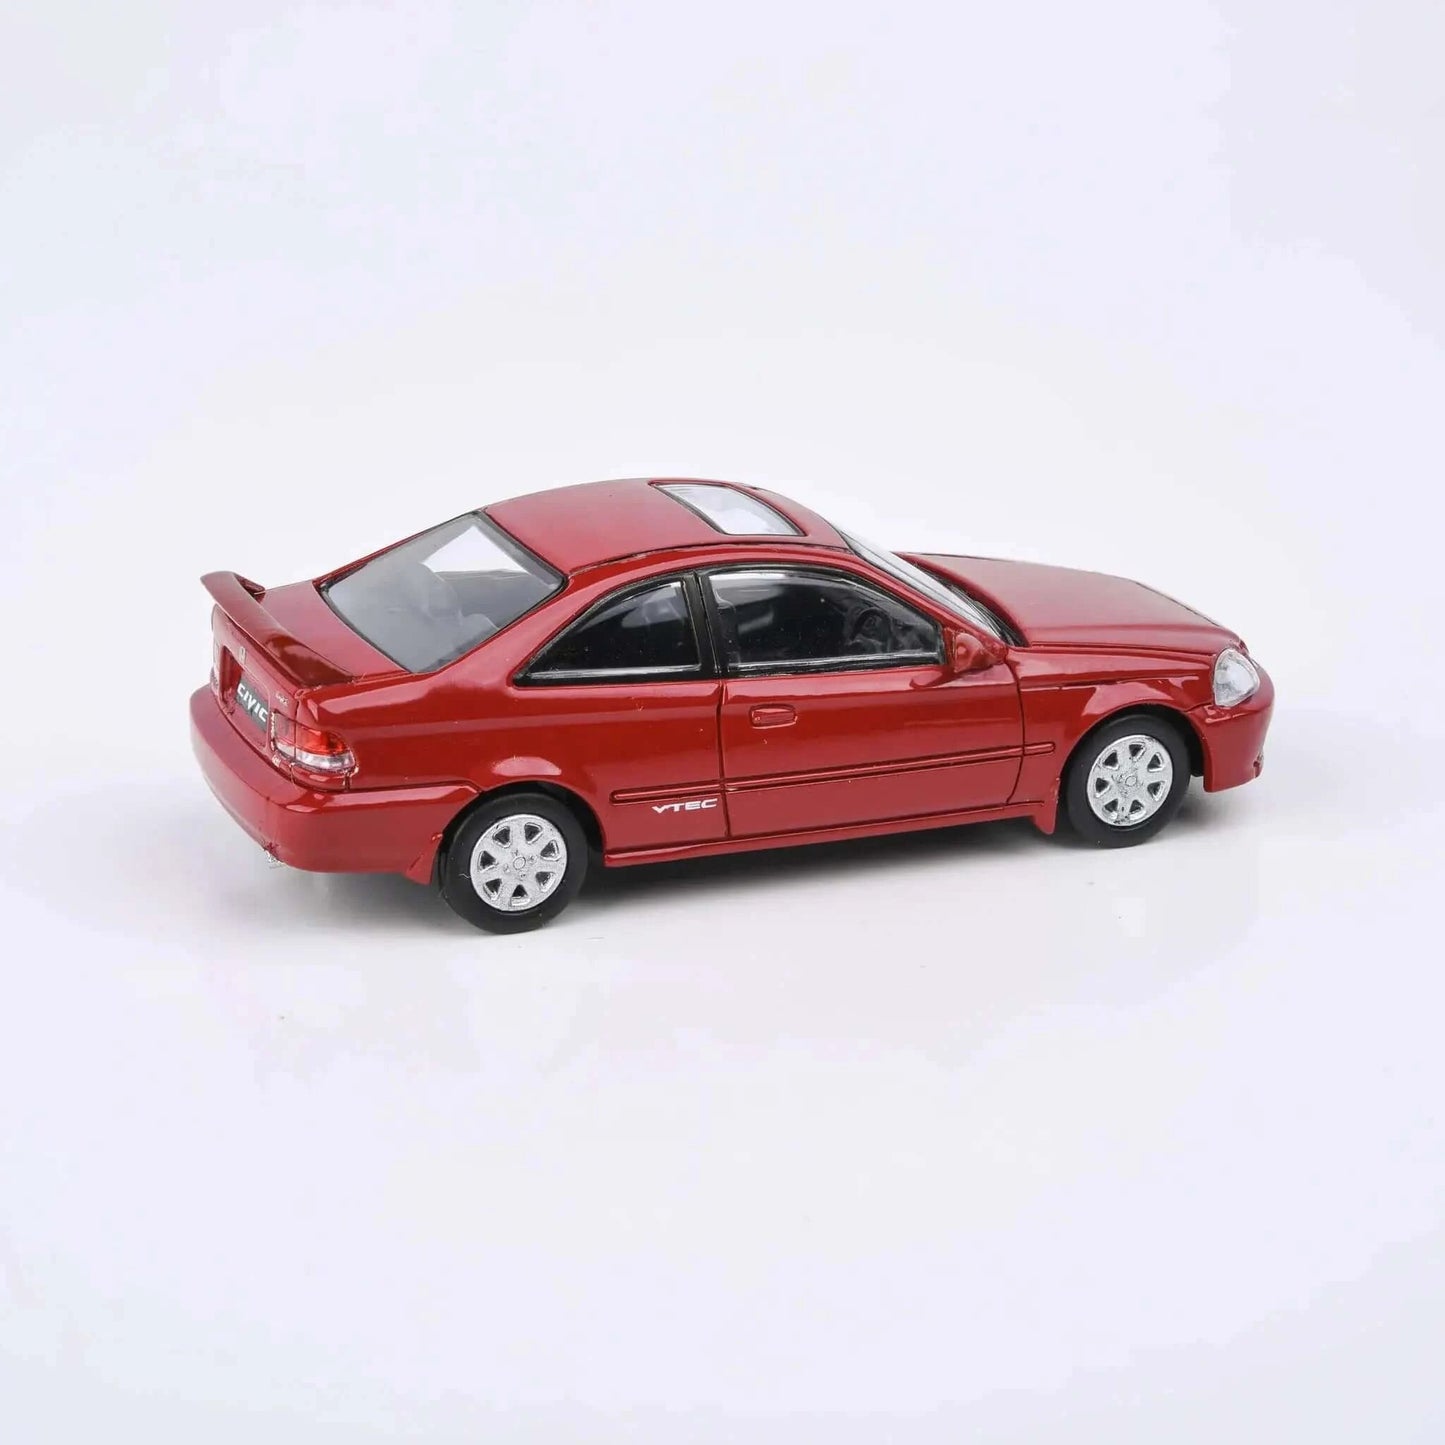 Honda civic Si EM1 1999 red LHD Para64 1/64 - pa55622lhd